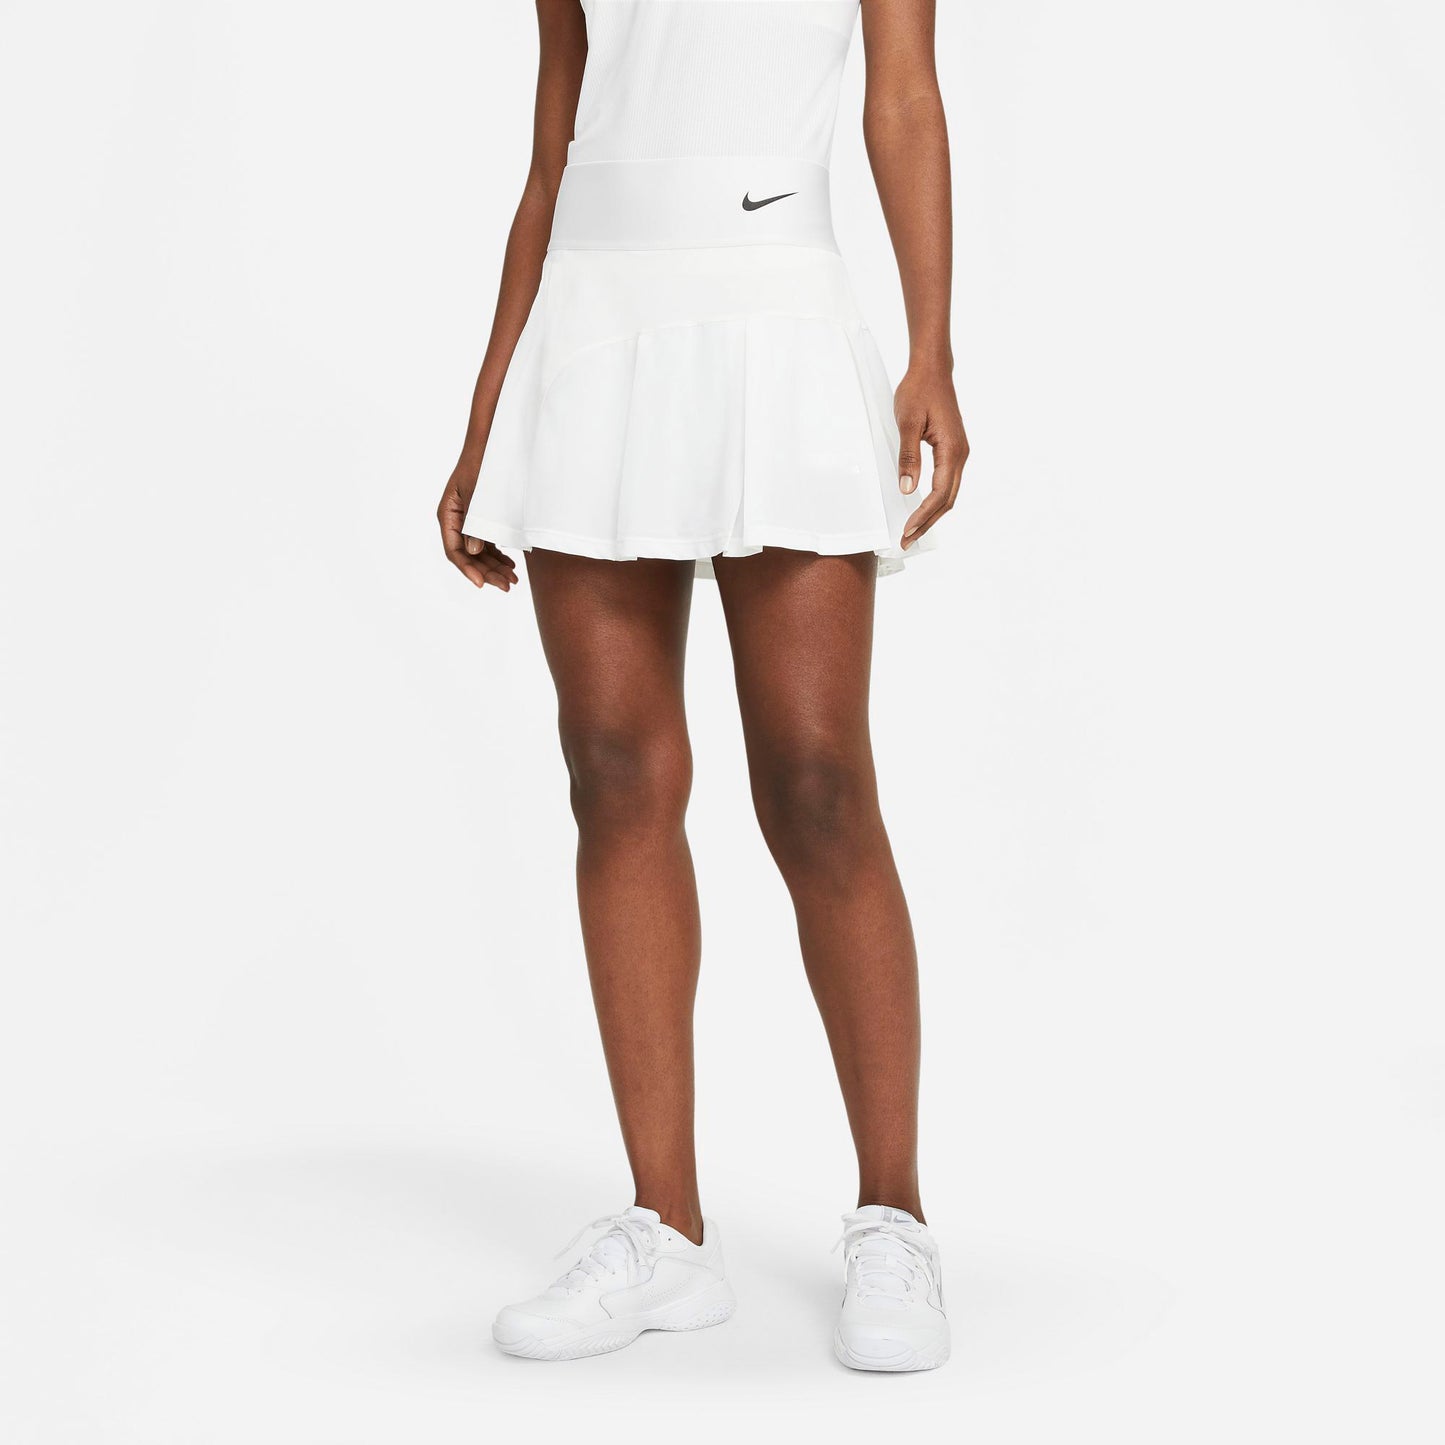 Nike Dri-FIT Advantage Women's Tennis Skirt White (1)